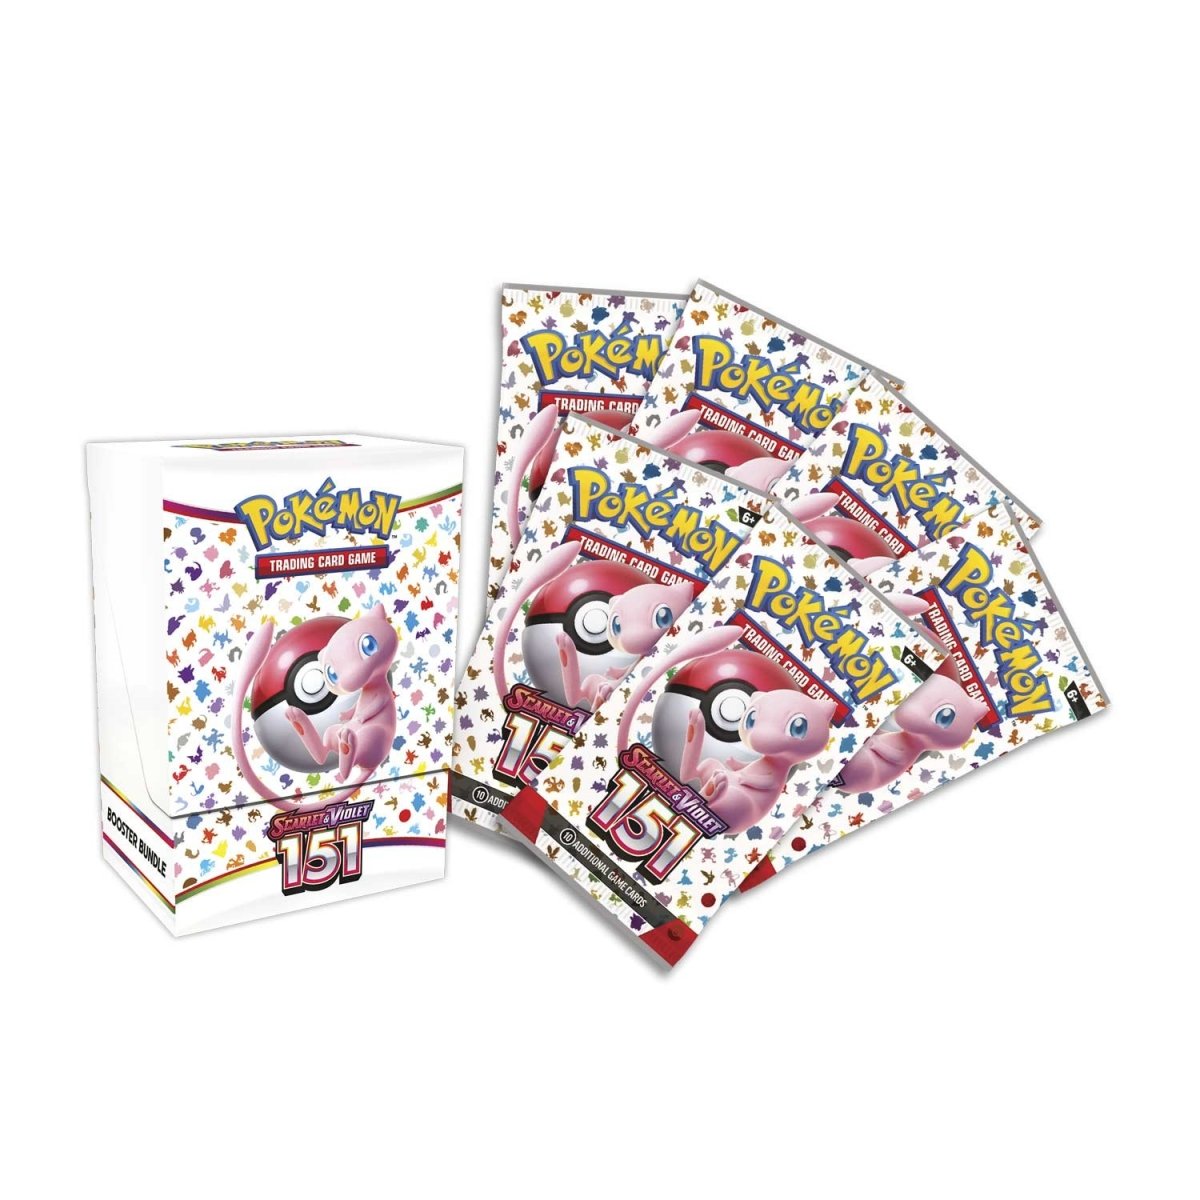 PSL Pokemon Card Scarlet & Violet Pokemon Card 151 Booster Box